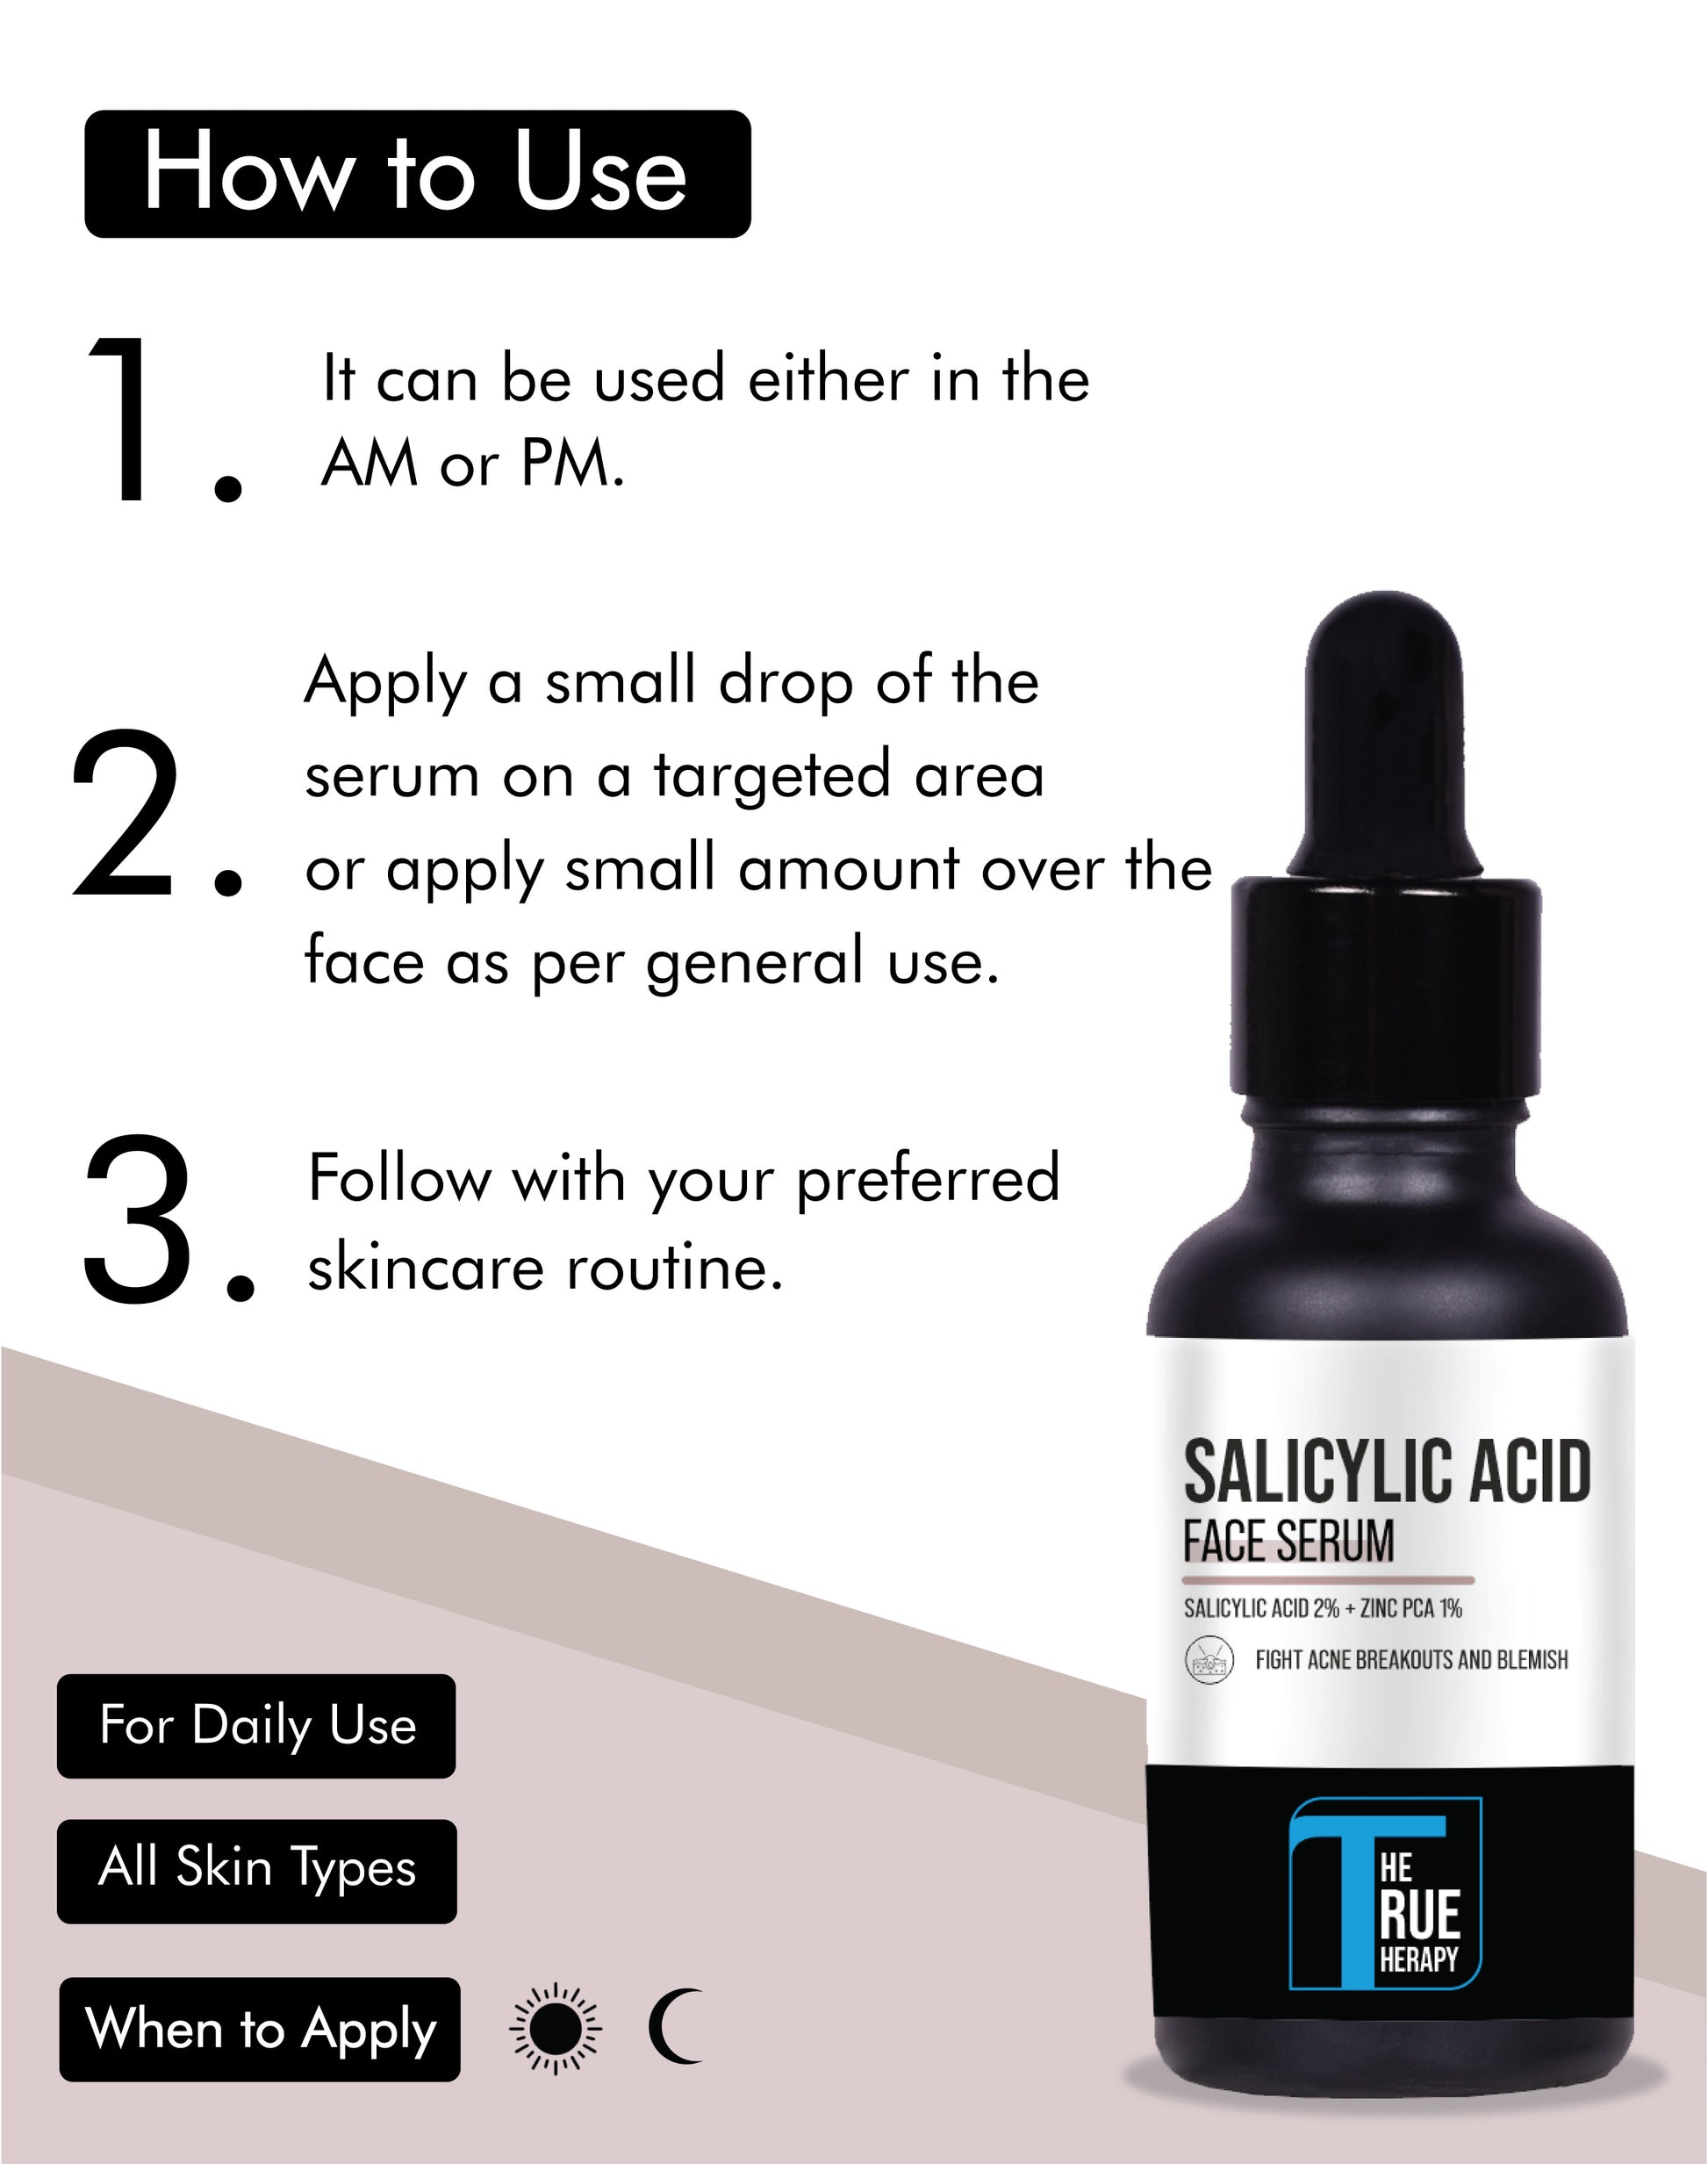 SALICYLIC ACID 2.0% + ZINC PCA Face Serum - How To Use